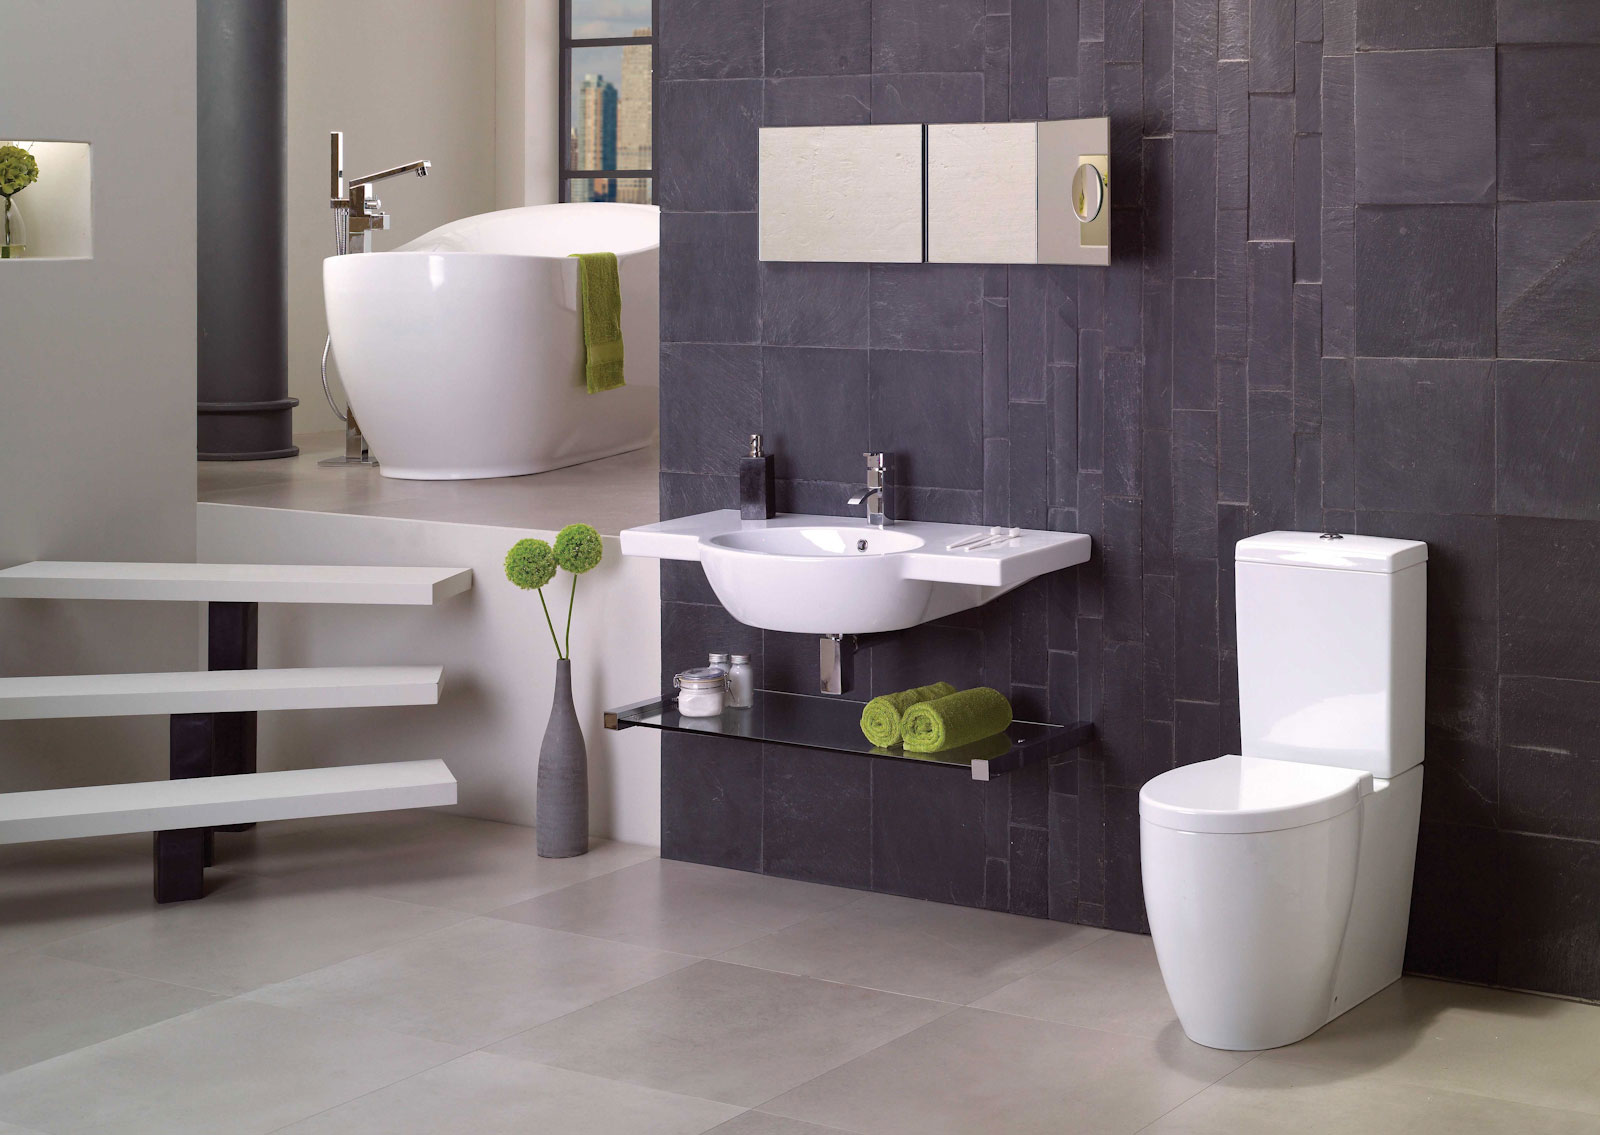 multi-level-bathroom-installation-001.jpg - 